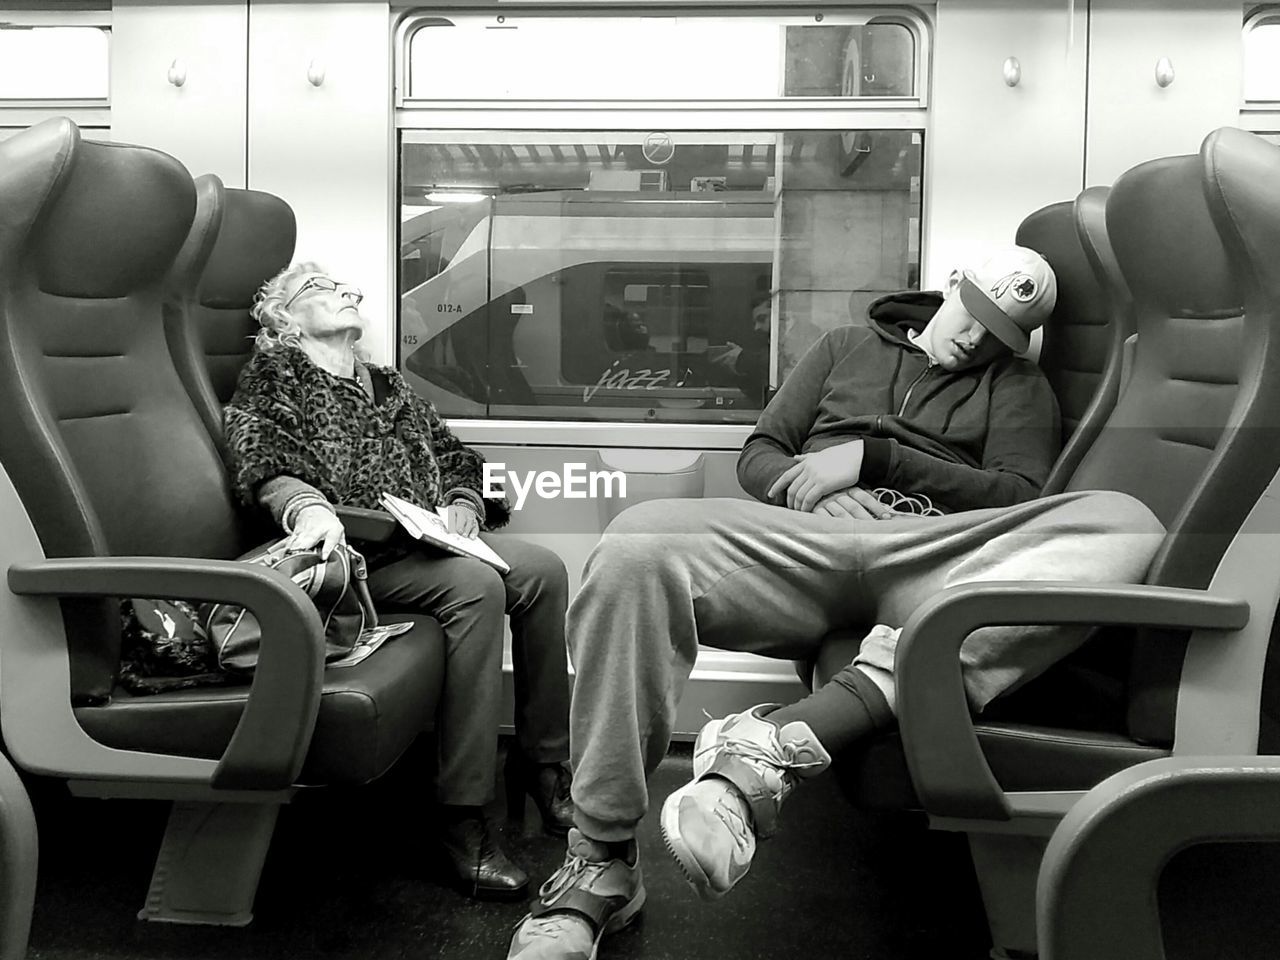 People sleeping in train